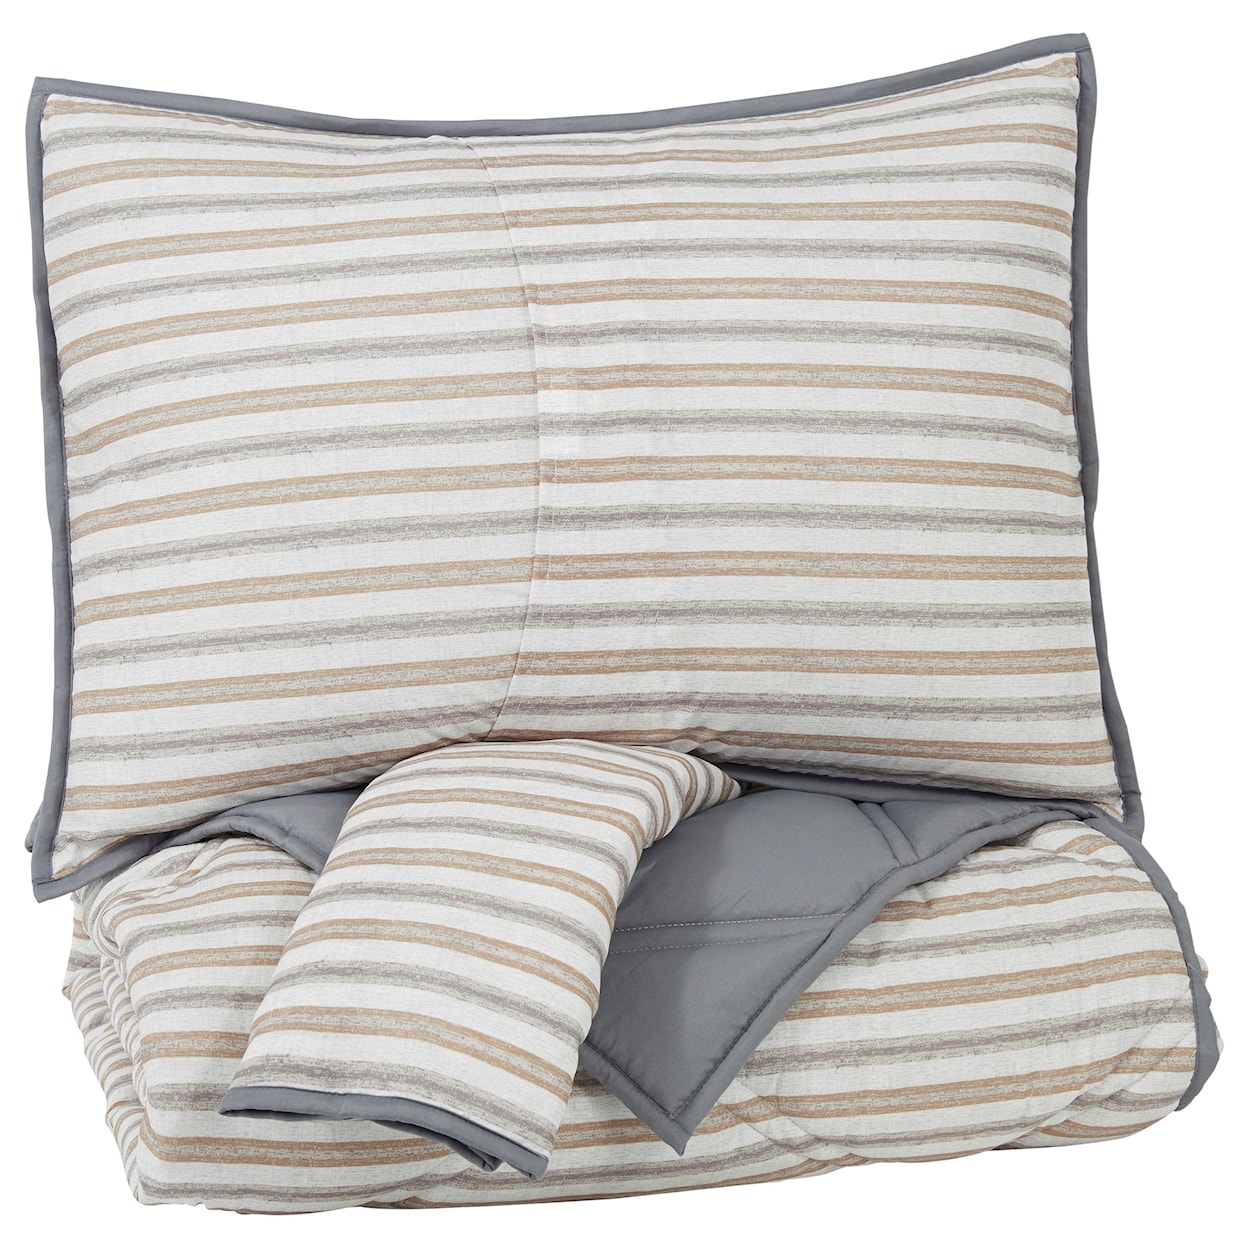 Ashley Furniture Signature Design Bedding Sets Full Rhey Tan/Brown/Gray Comforter Set